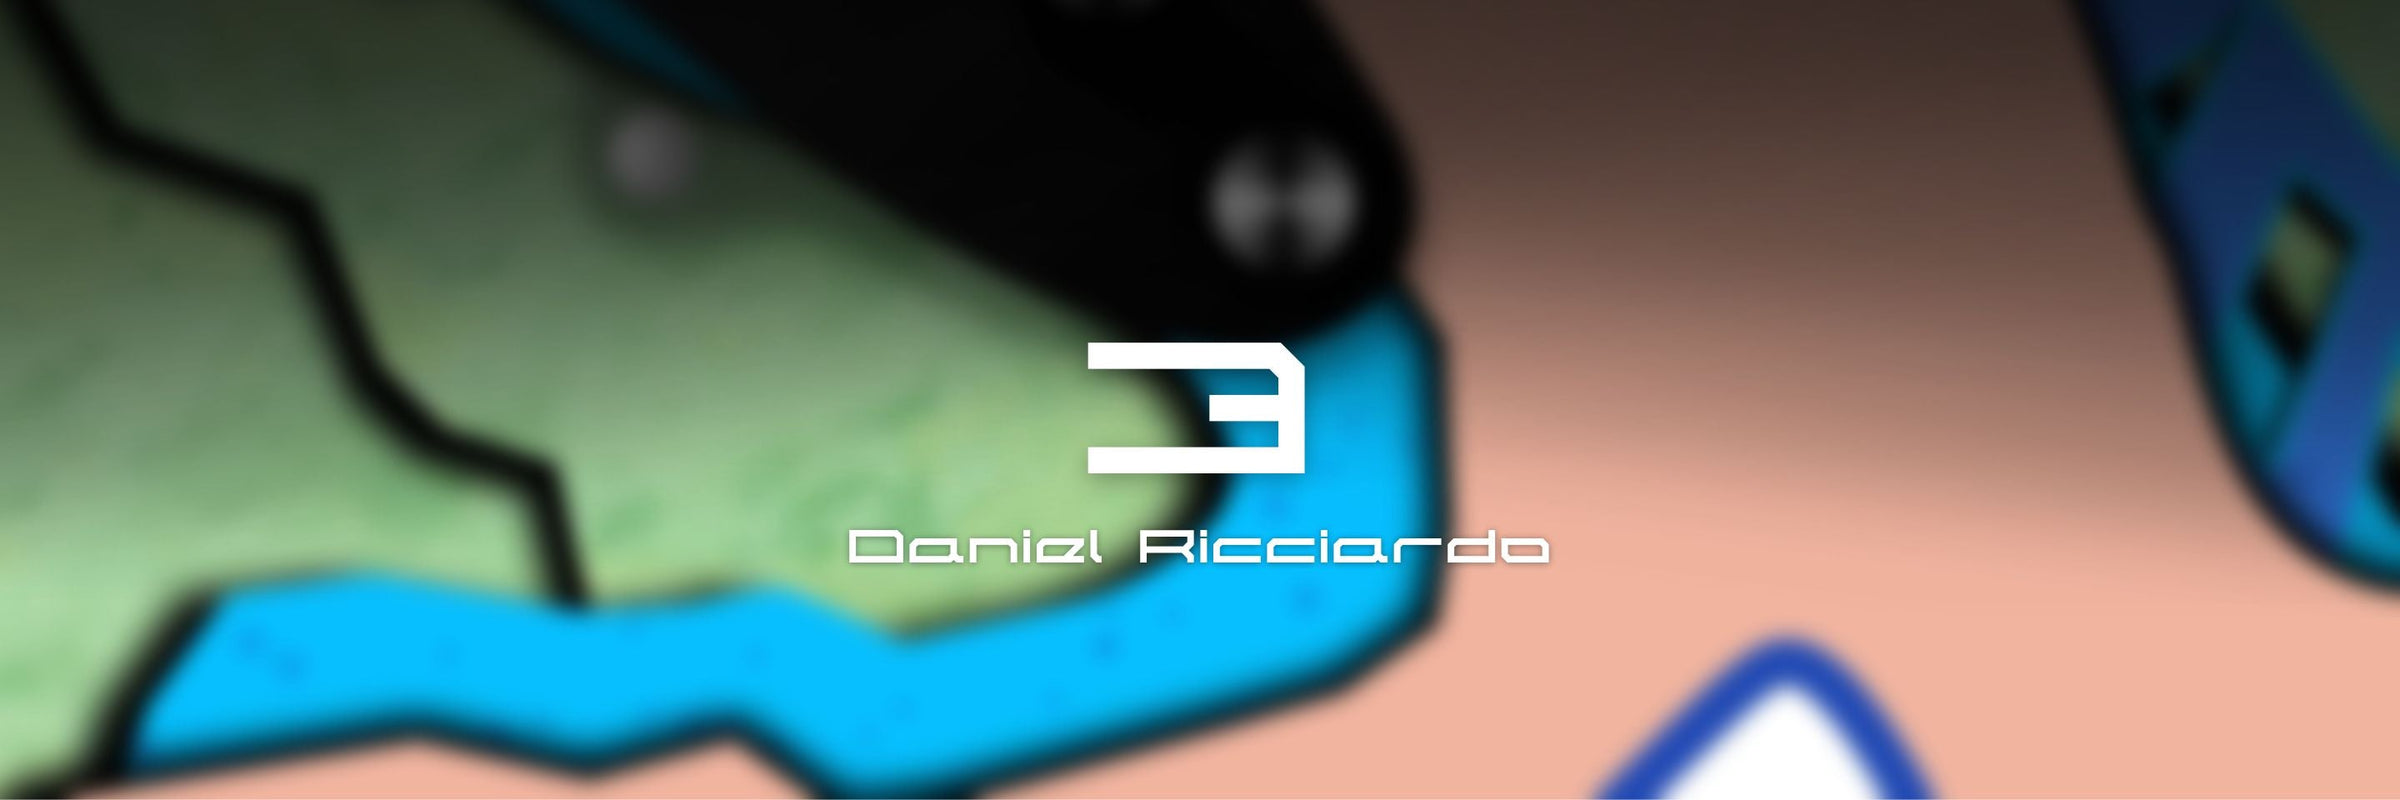 Daniel Ricciardo - F1 and Motorpsort Offficial Merchandise - Fueler store